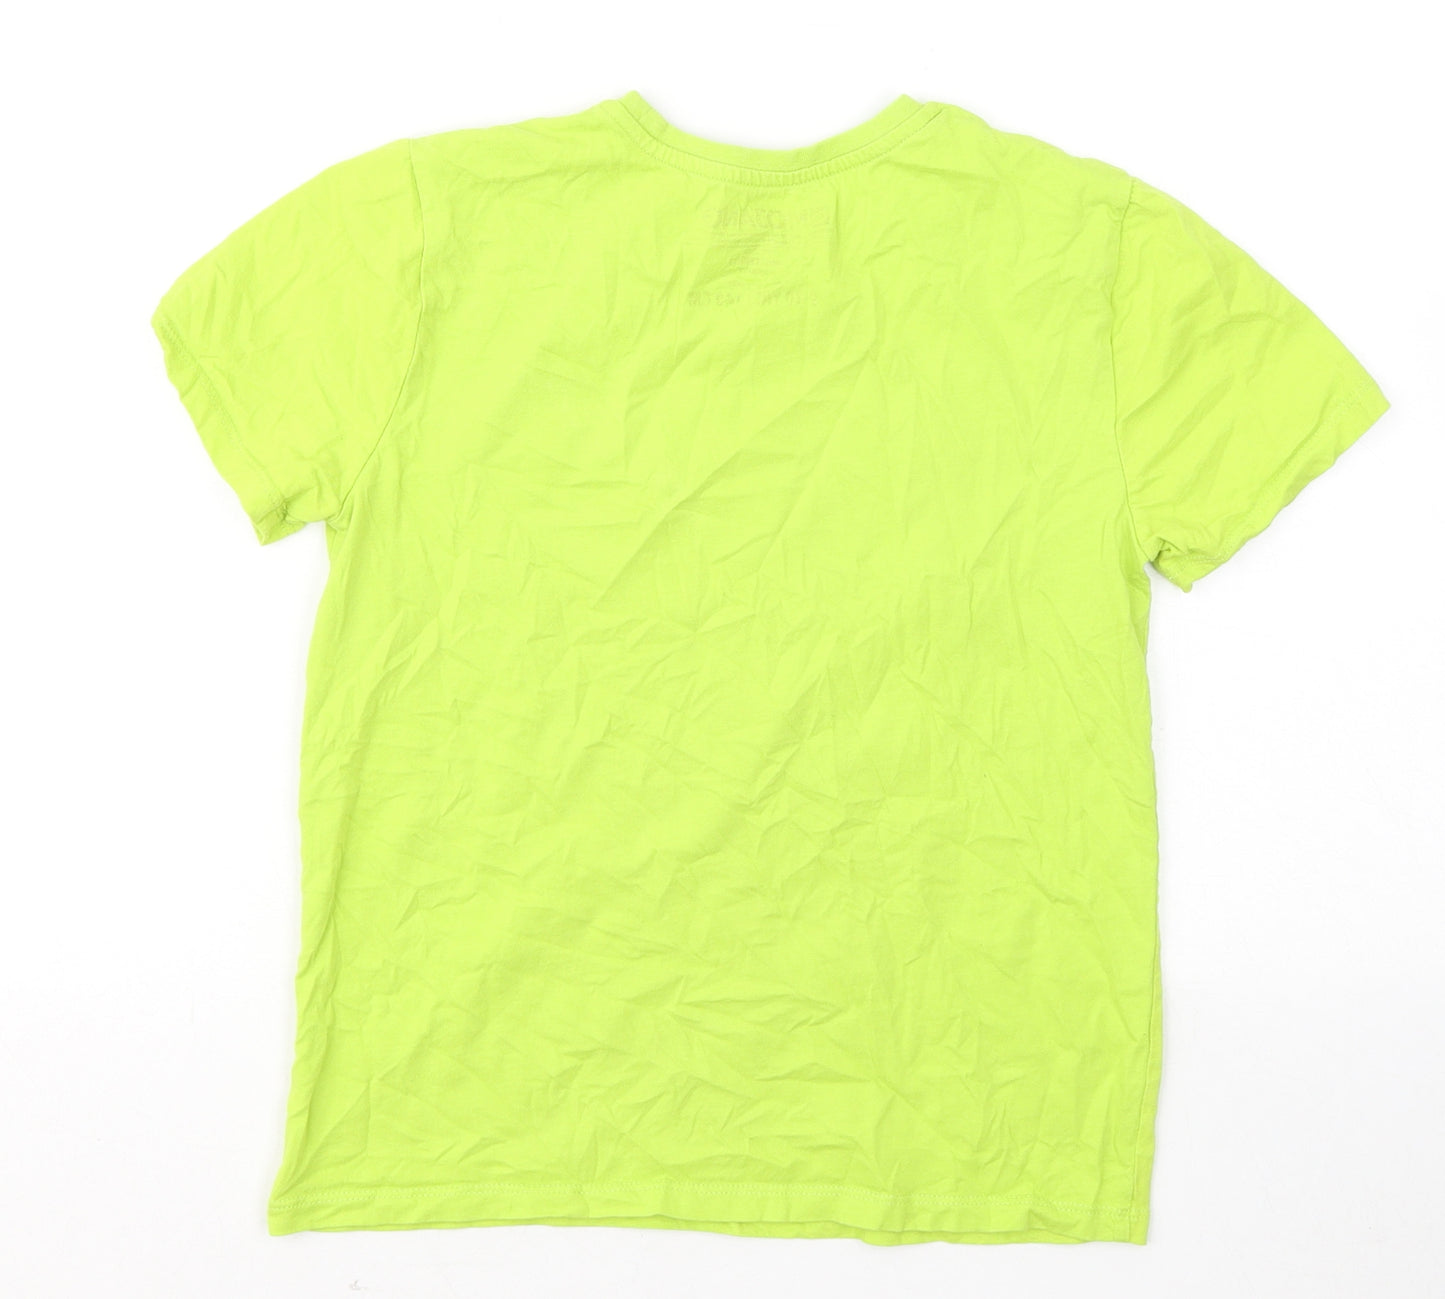 Mojang Boys Green Cotton Basic T-Shirt Size 9-10 Years Round Neck - Minecraft